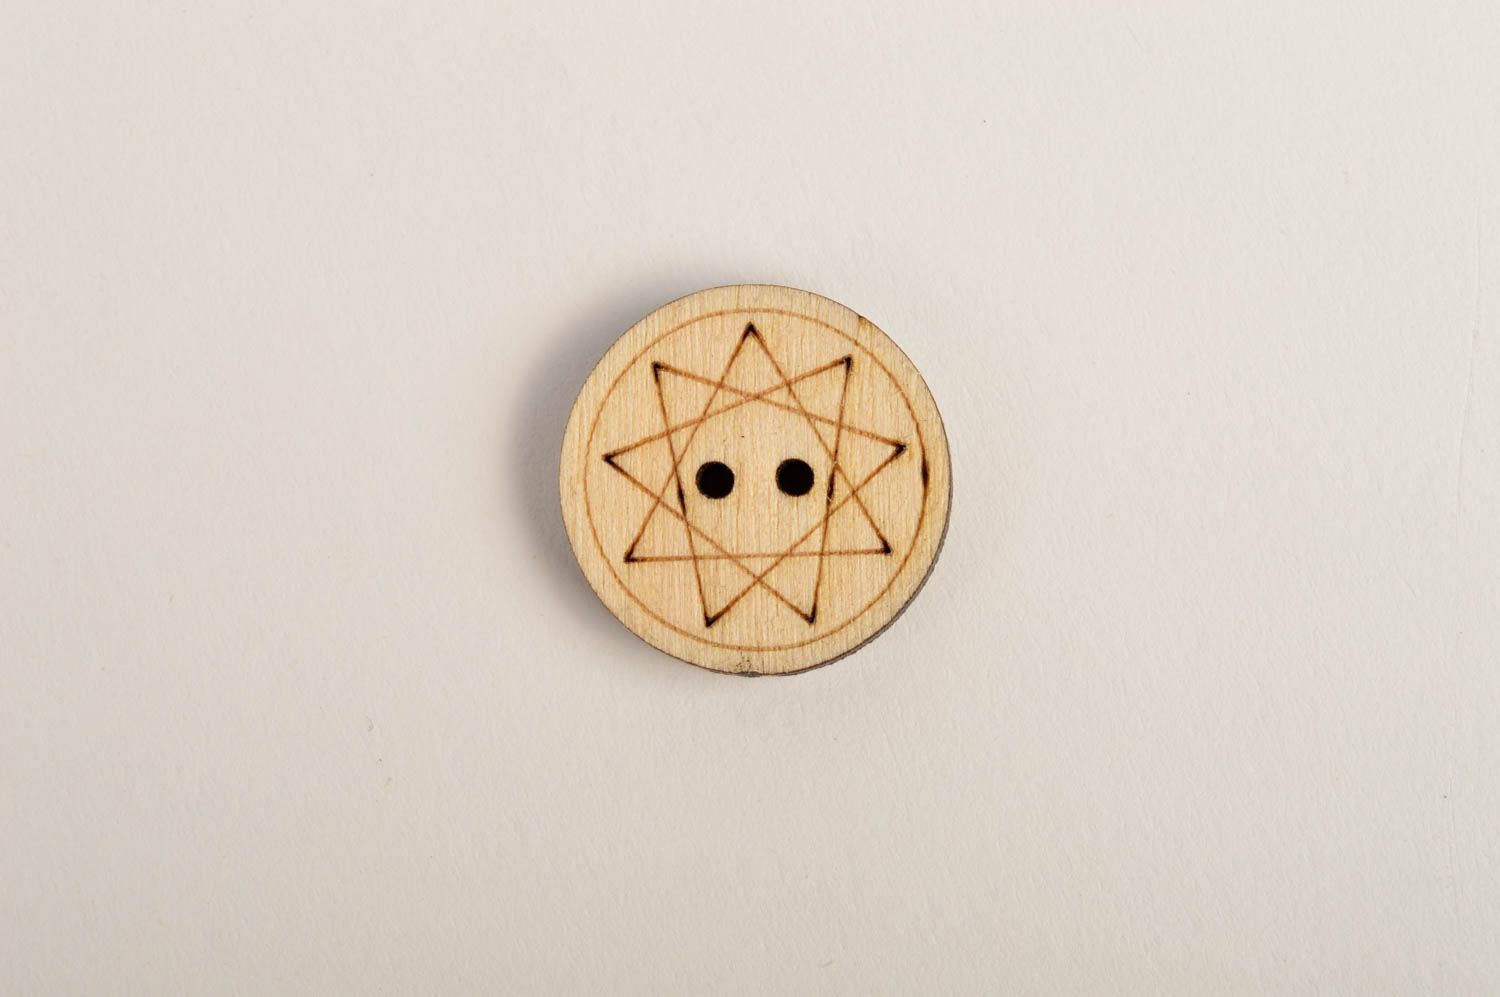 Handmade wooden blank button needlework supplies gift ideas for girls photo 3